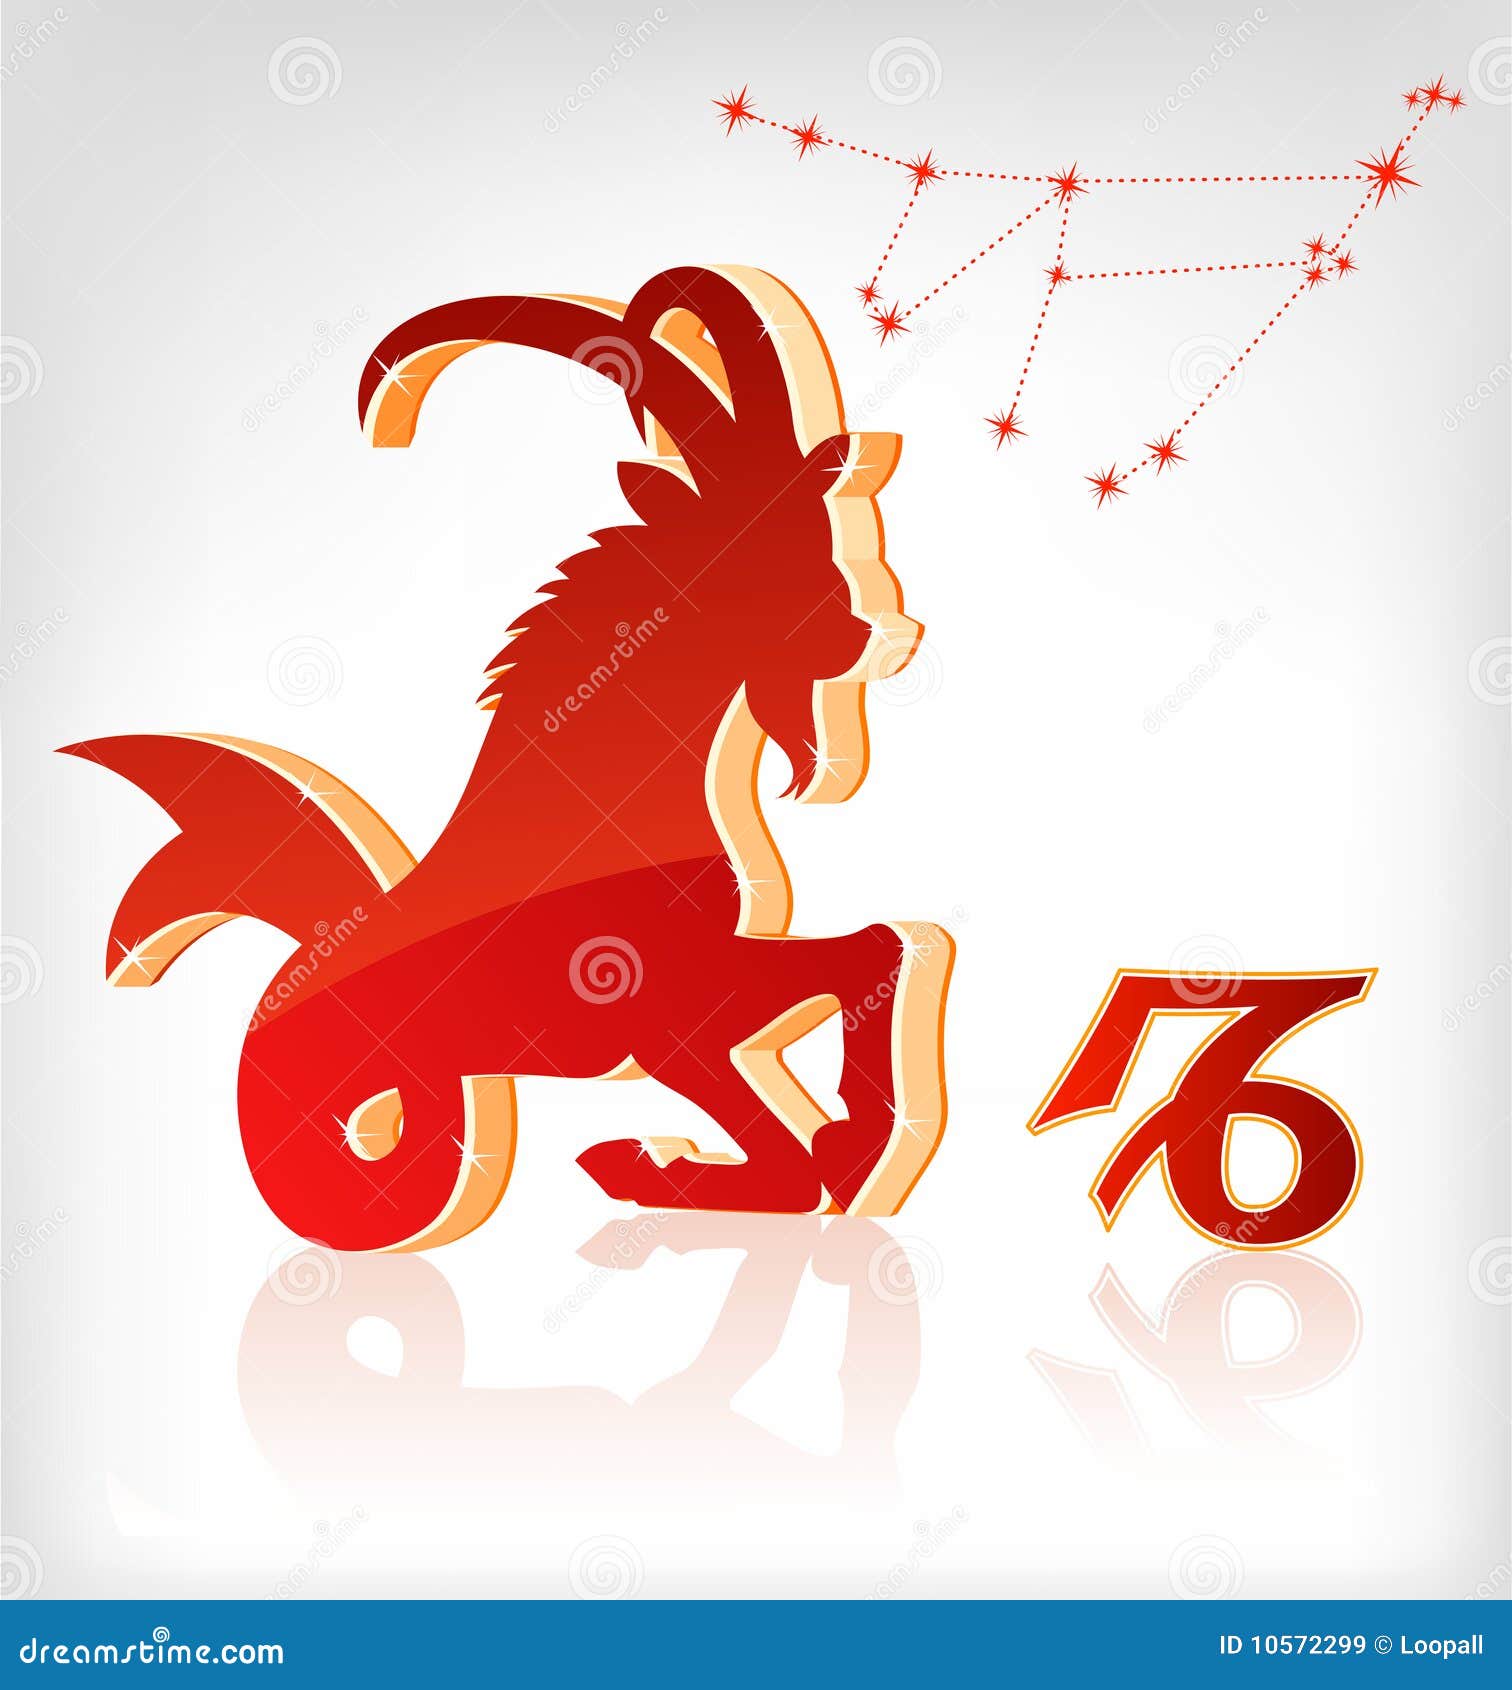 240+ Capricorn Tattoo Designs (2023) Constellation, Zodiac, Horoscope Signs  and symbols